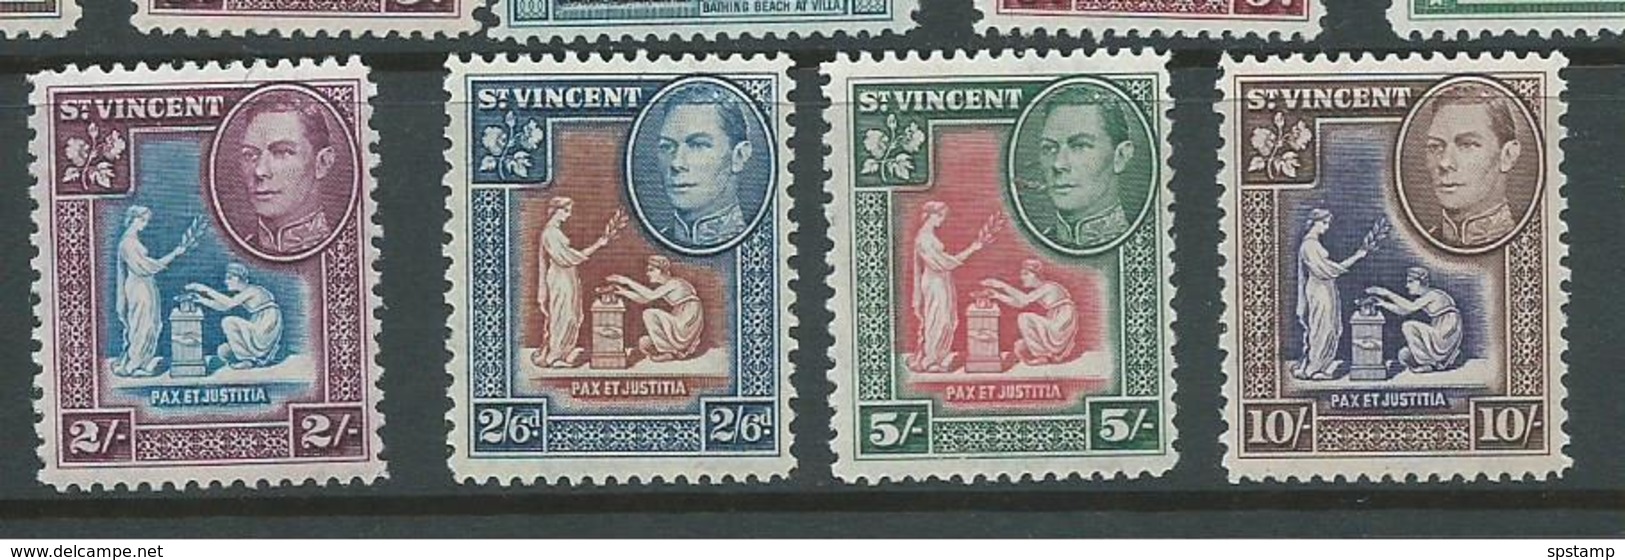 St Vincent 1938 KGVI Definitives 2 Shilling To 10 Shilling Badge Of Colony MNH (4) - St.Vincent (...-1979)